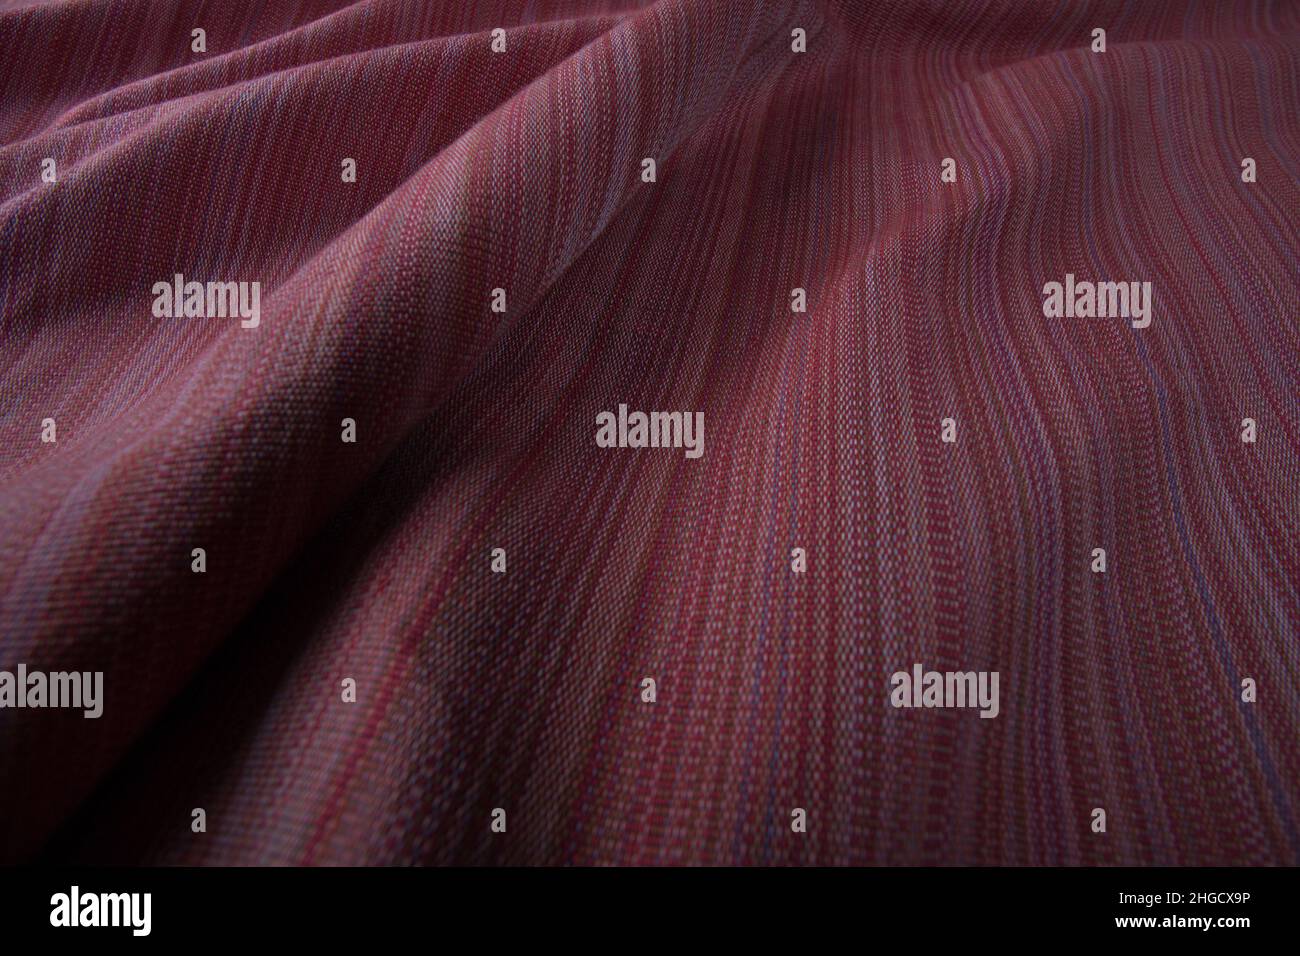 Primer plano de textura de tela de algodón tejida a mano, algodón tailandés de color natural teñido Foto de stock